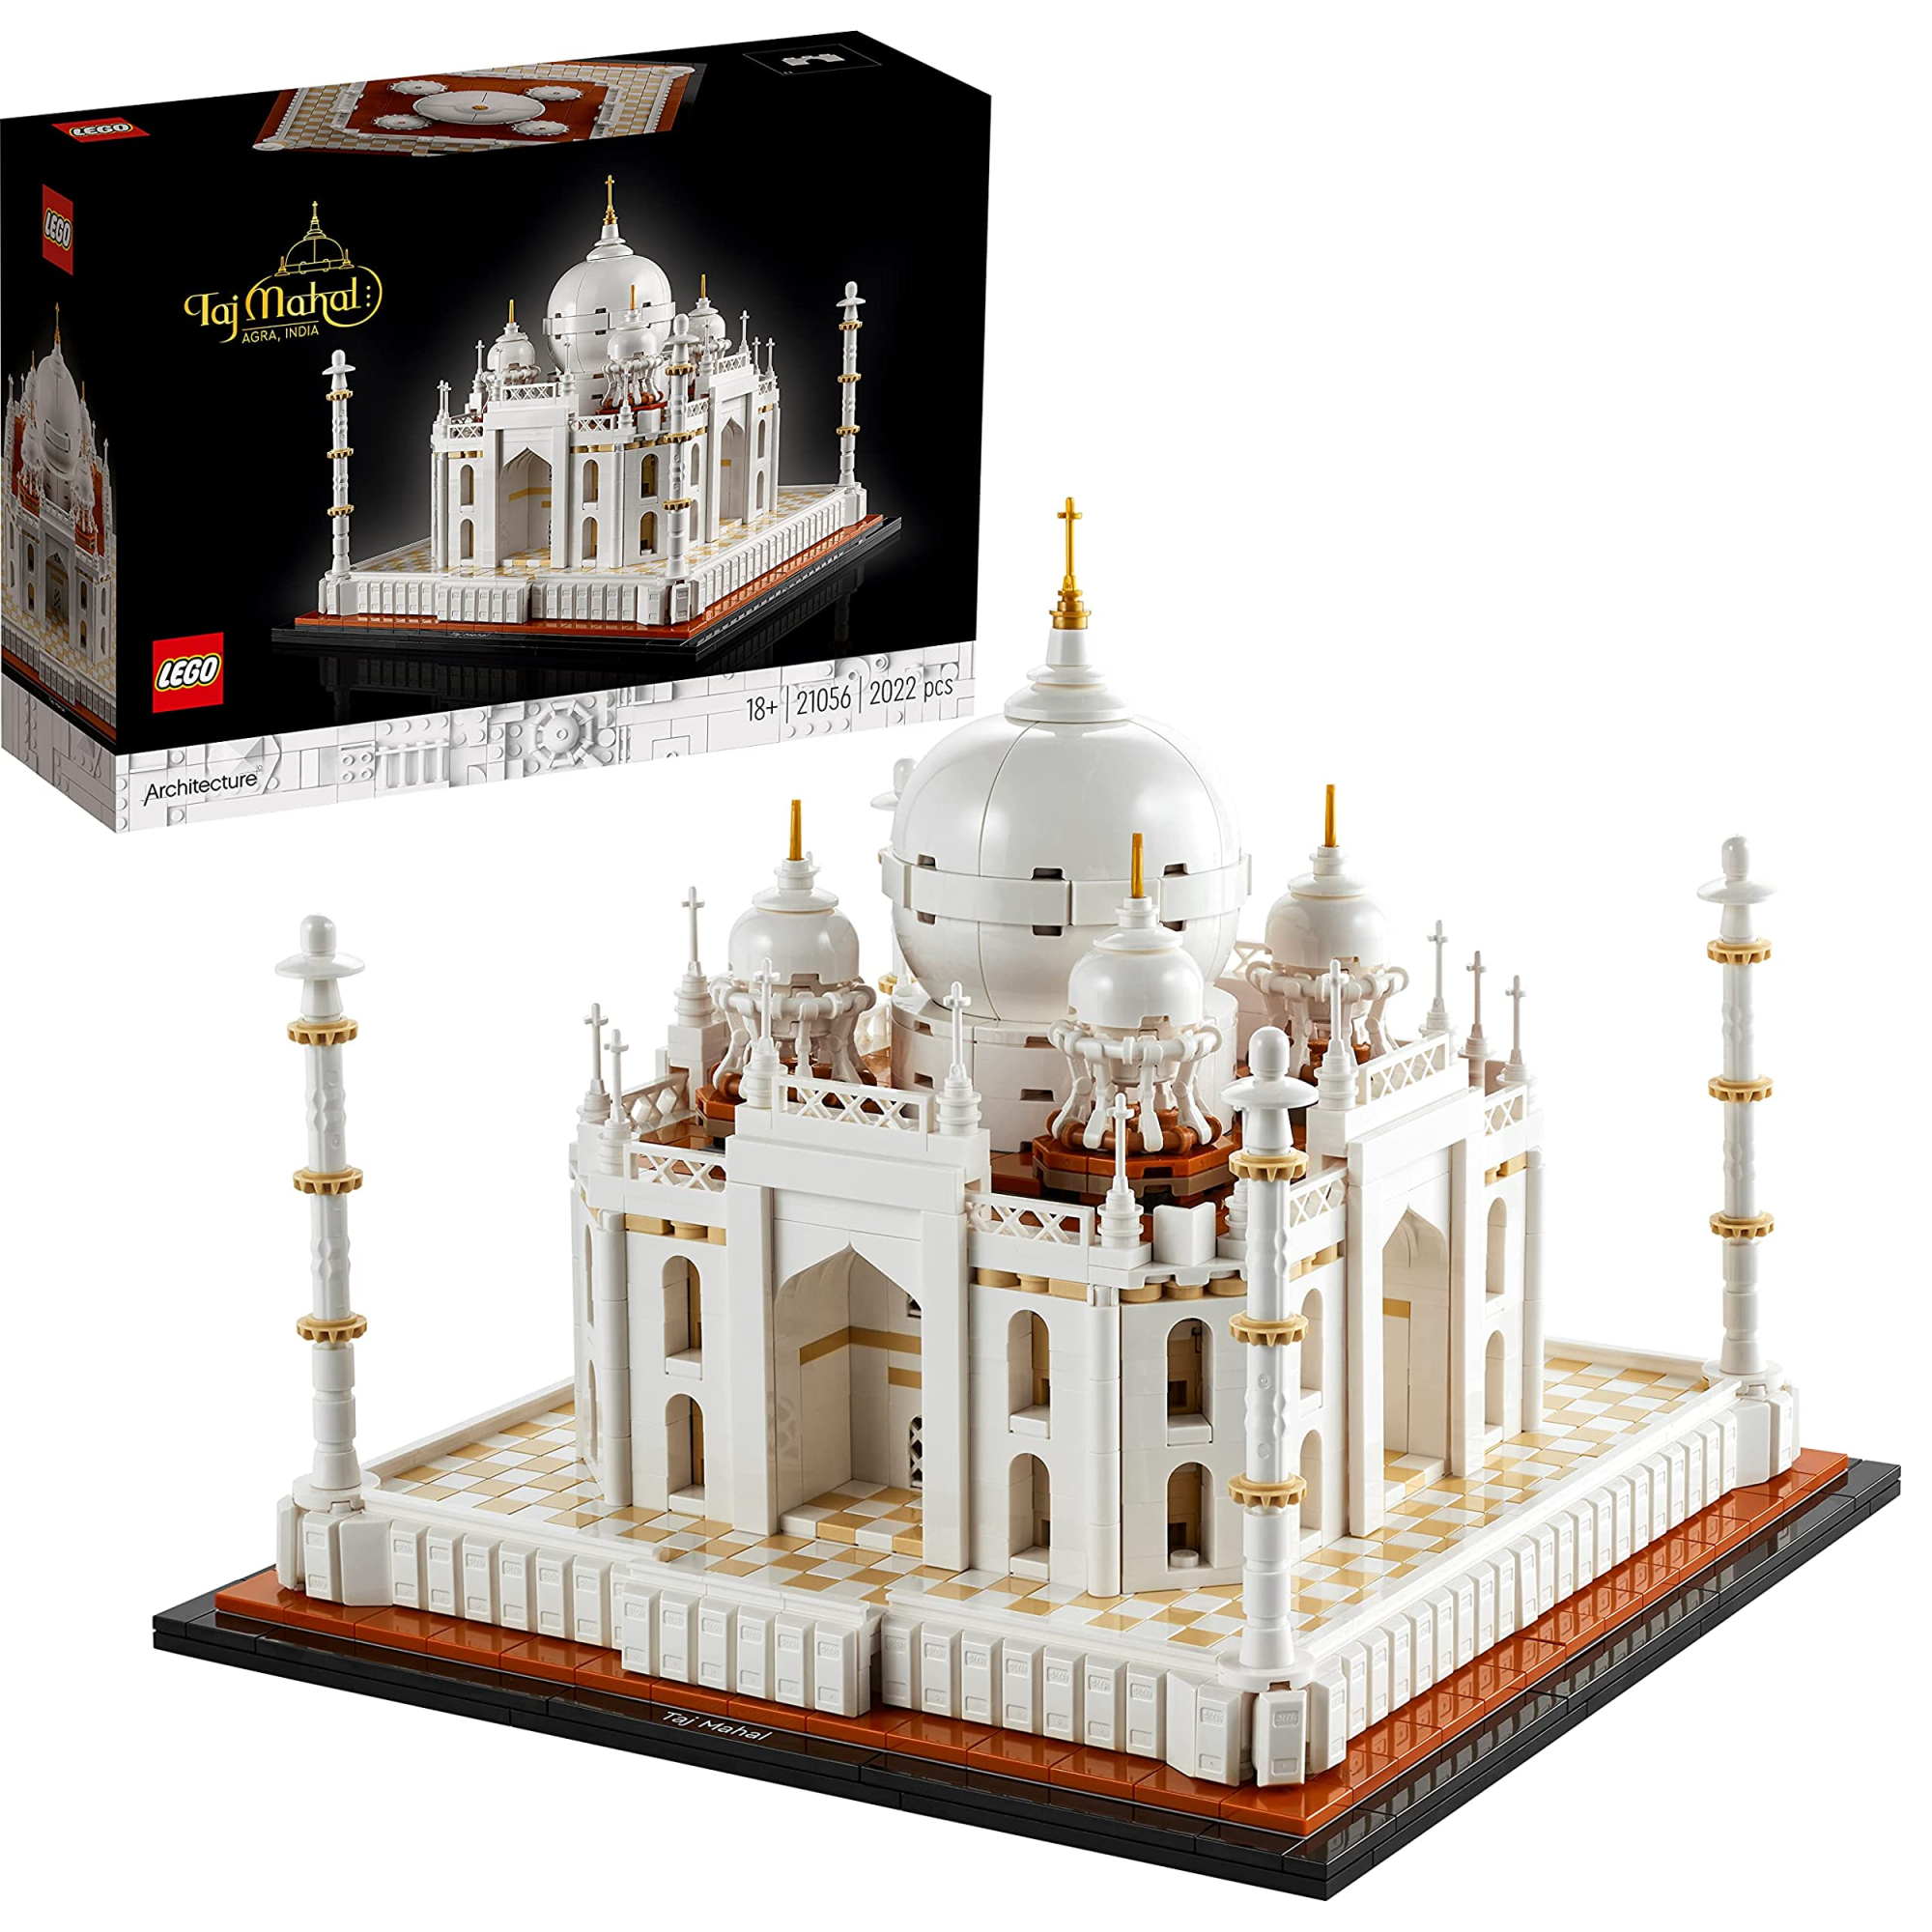 Lego: 21056 Architecture Taj Mahal